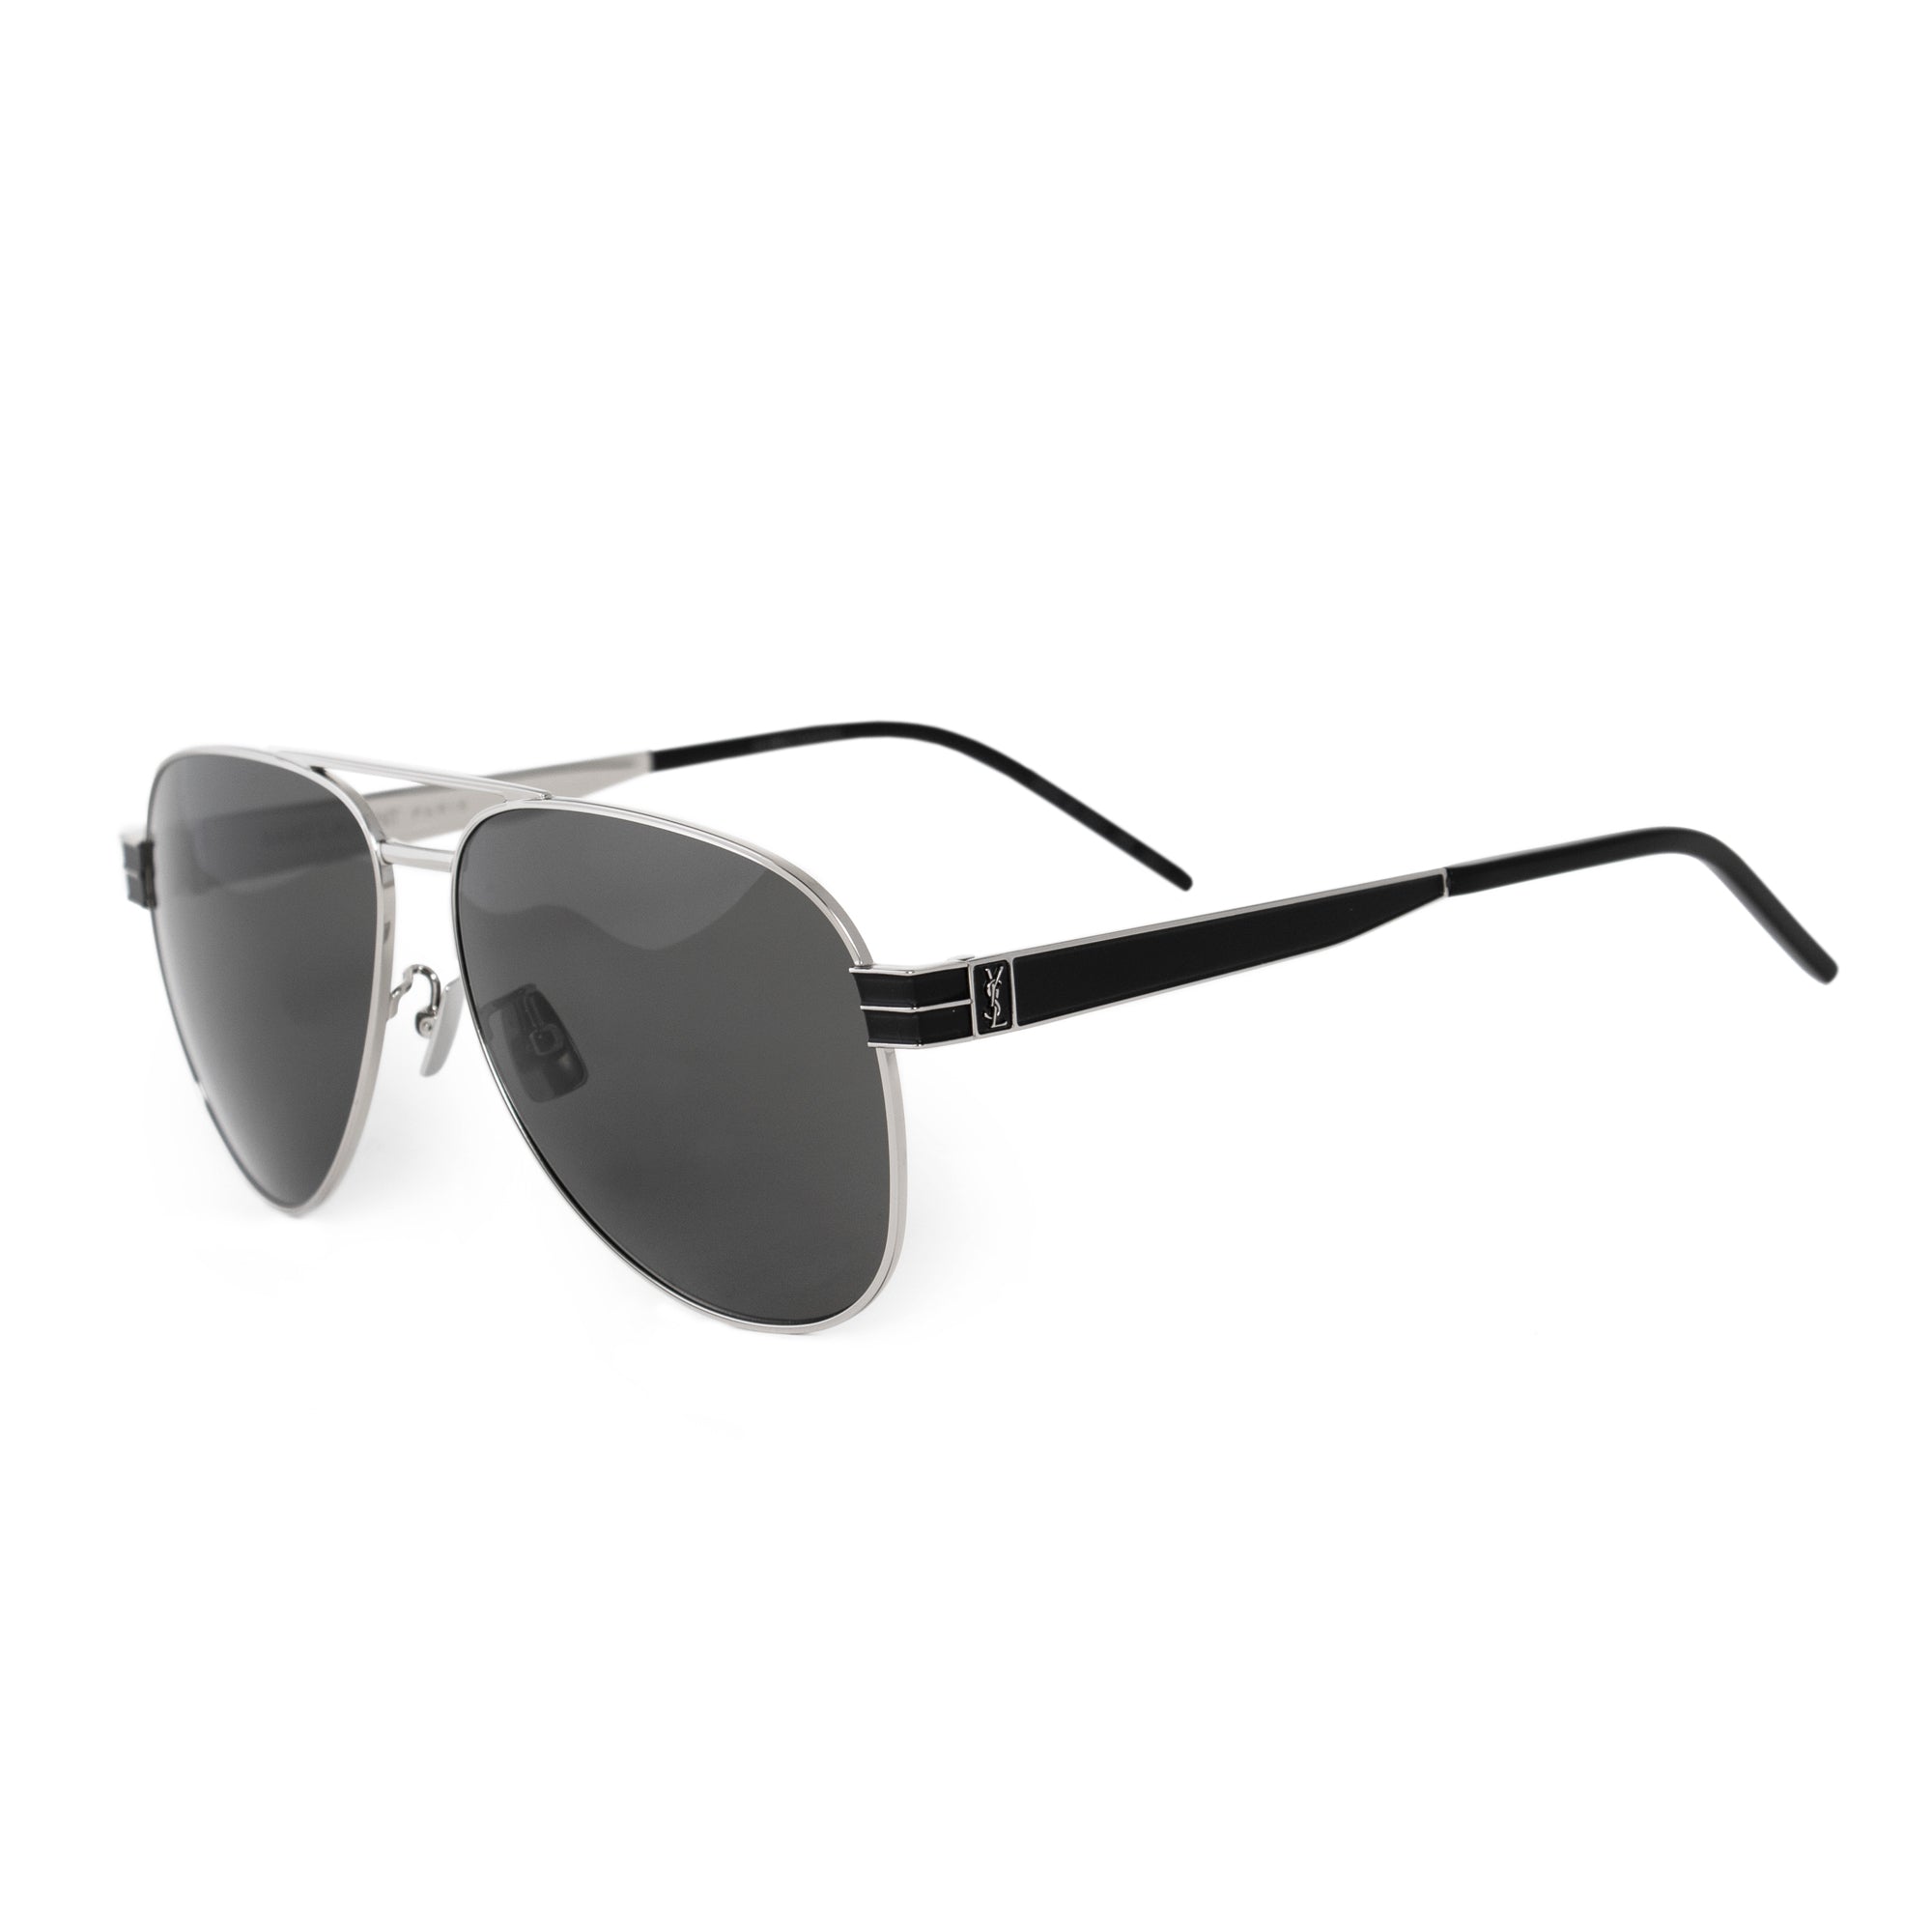 Saint Laurent Aviator Sunglasses SLM53 002 60